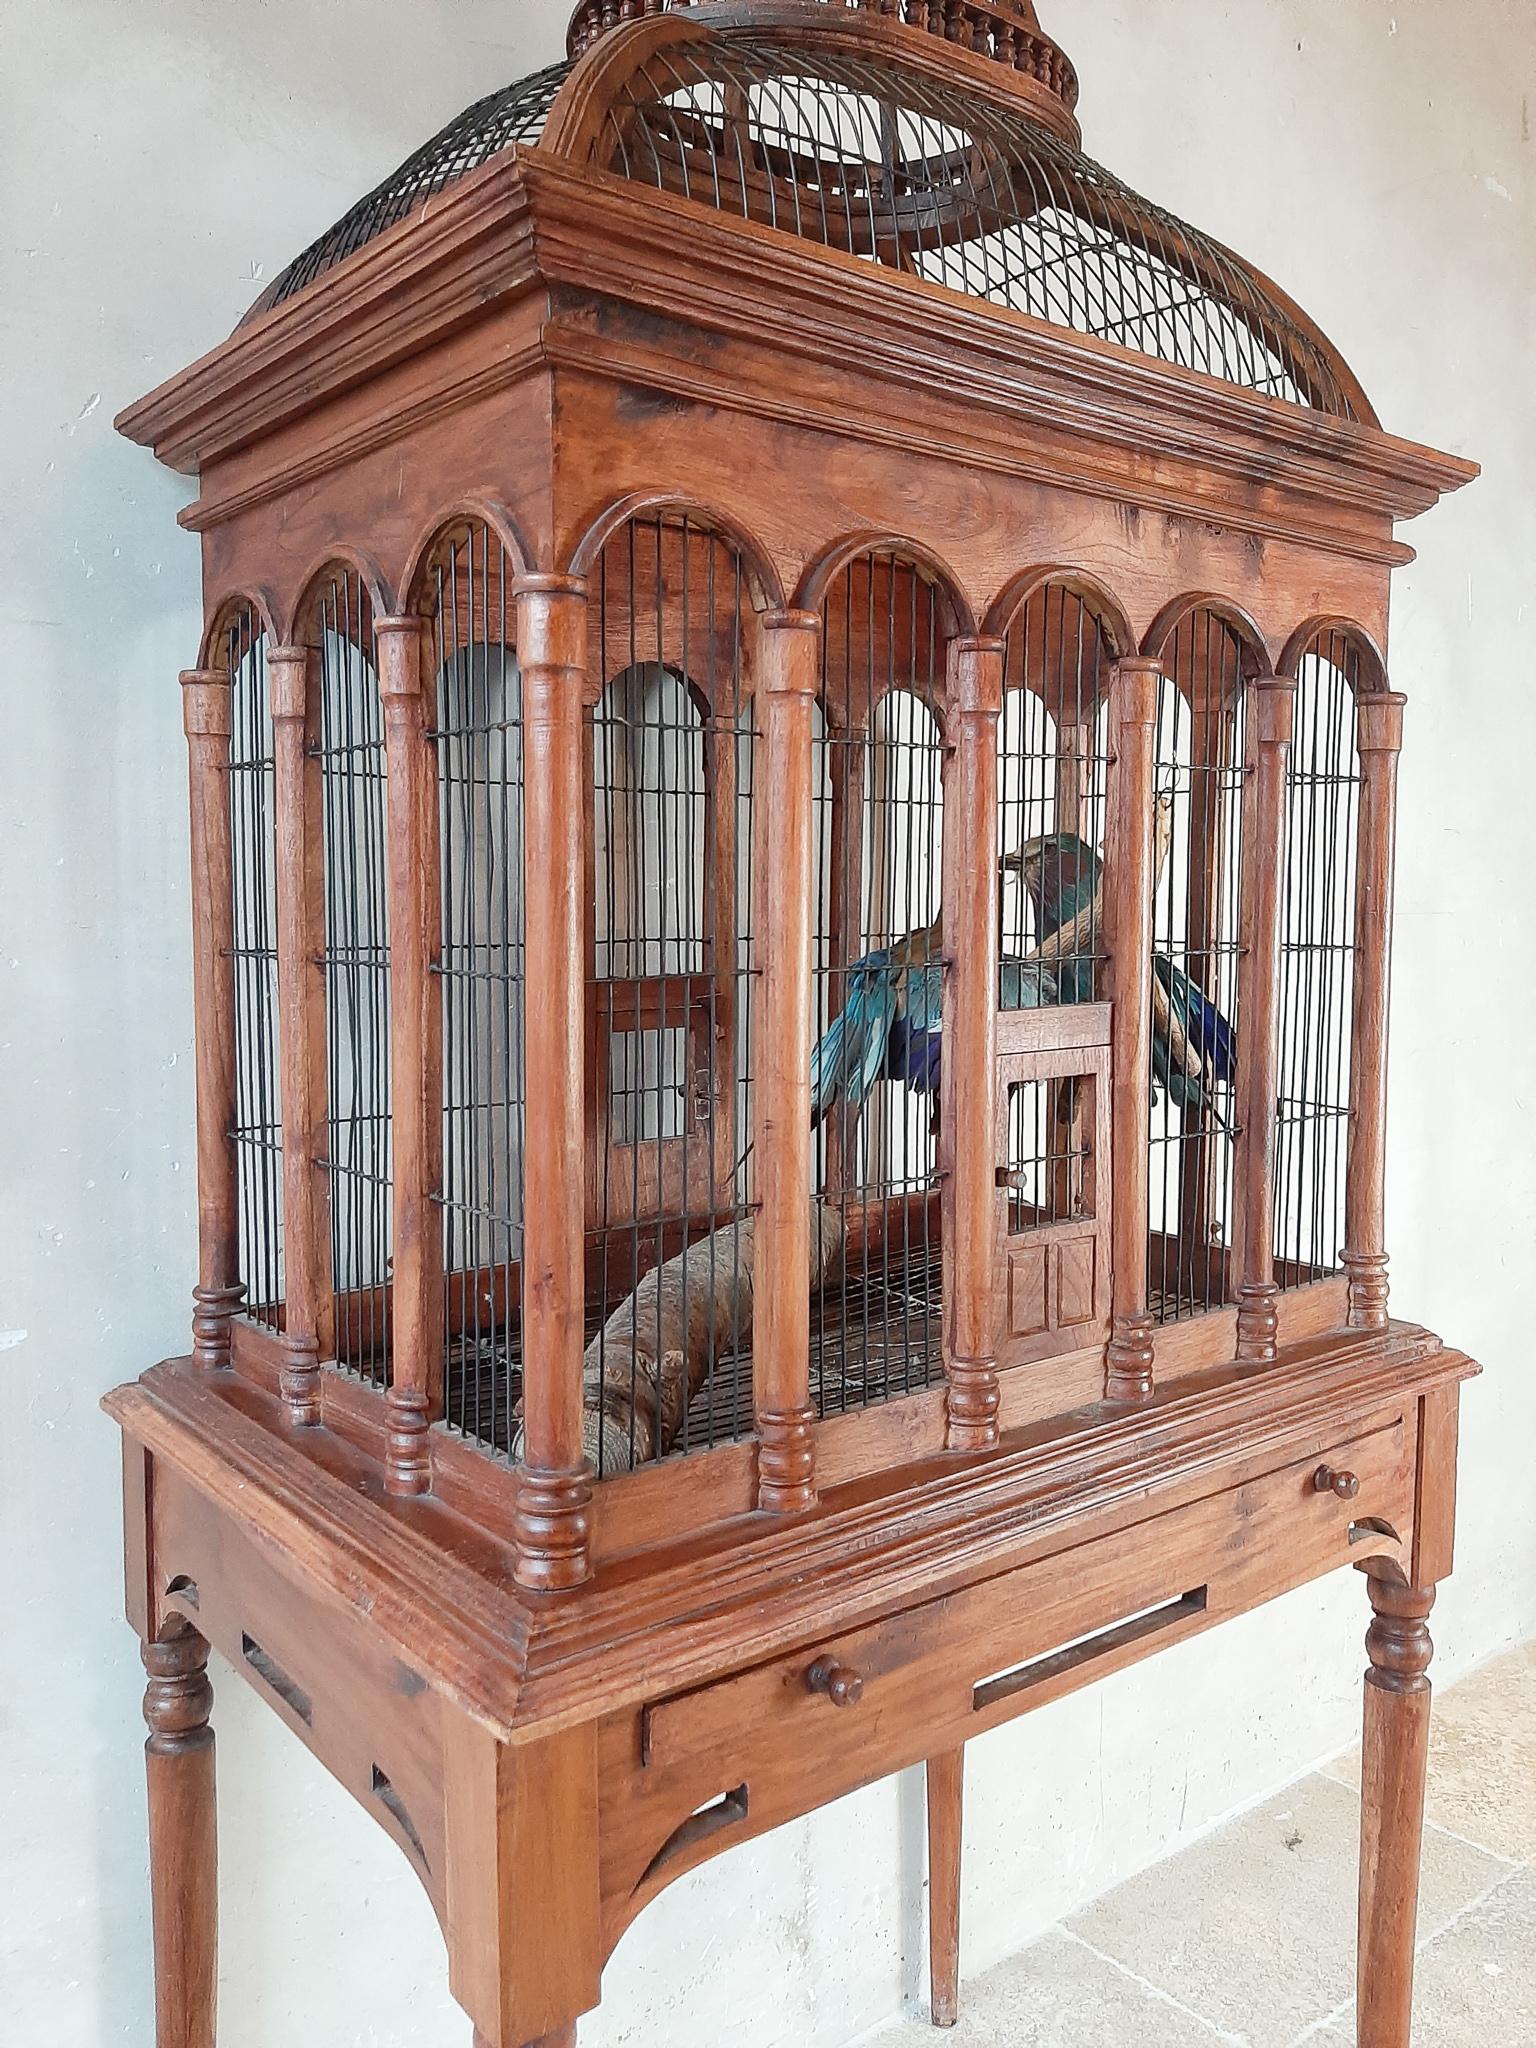 wooden bird cage decor